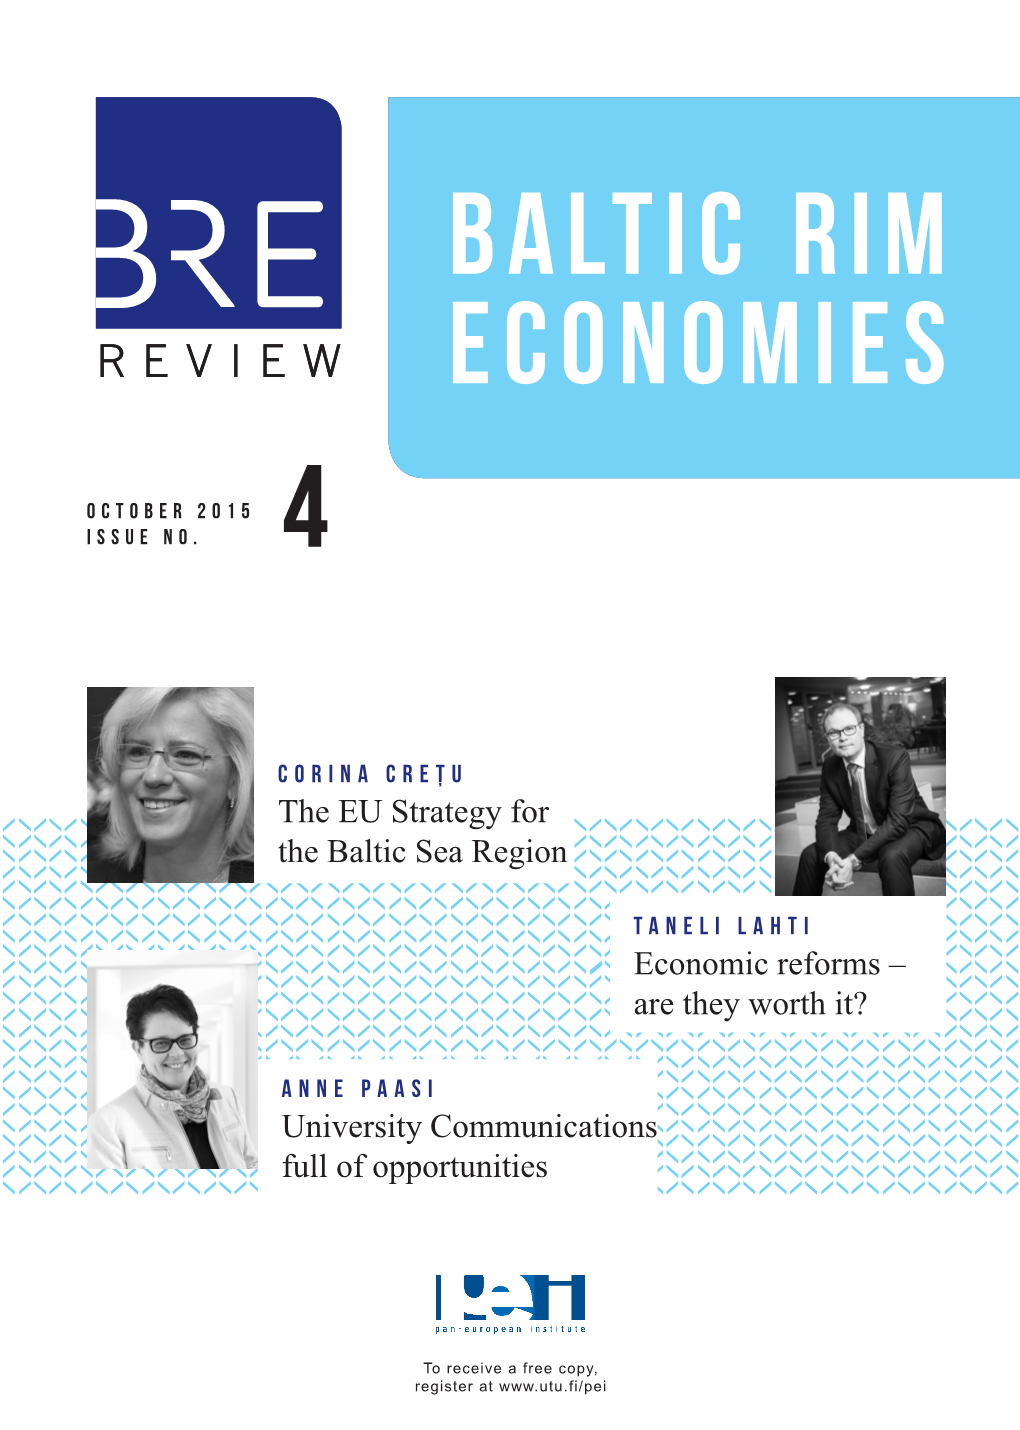 Baltic Rim Economies 4/2015